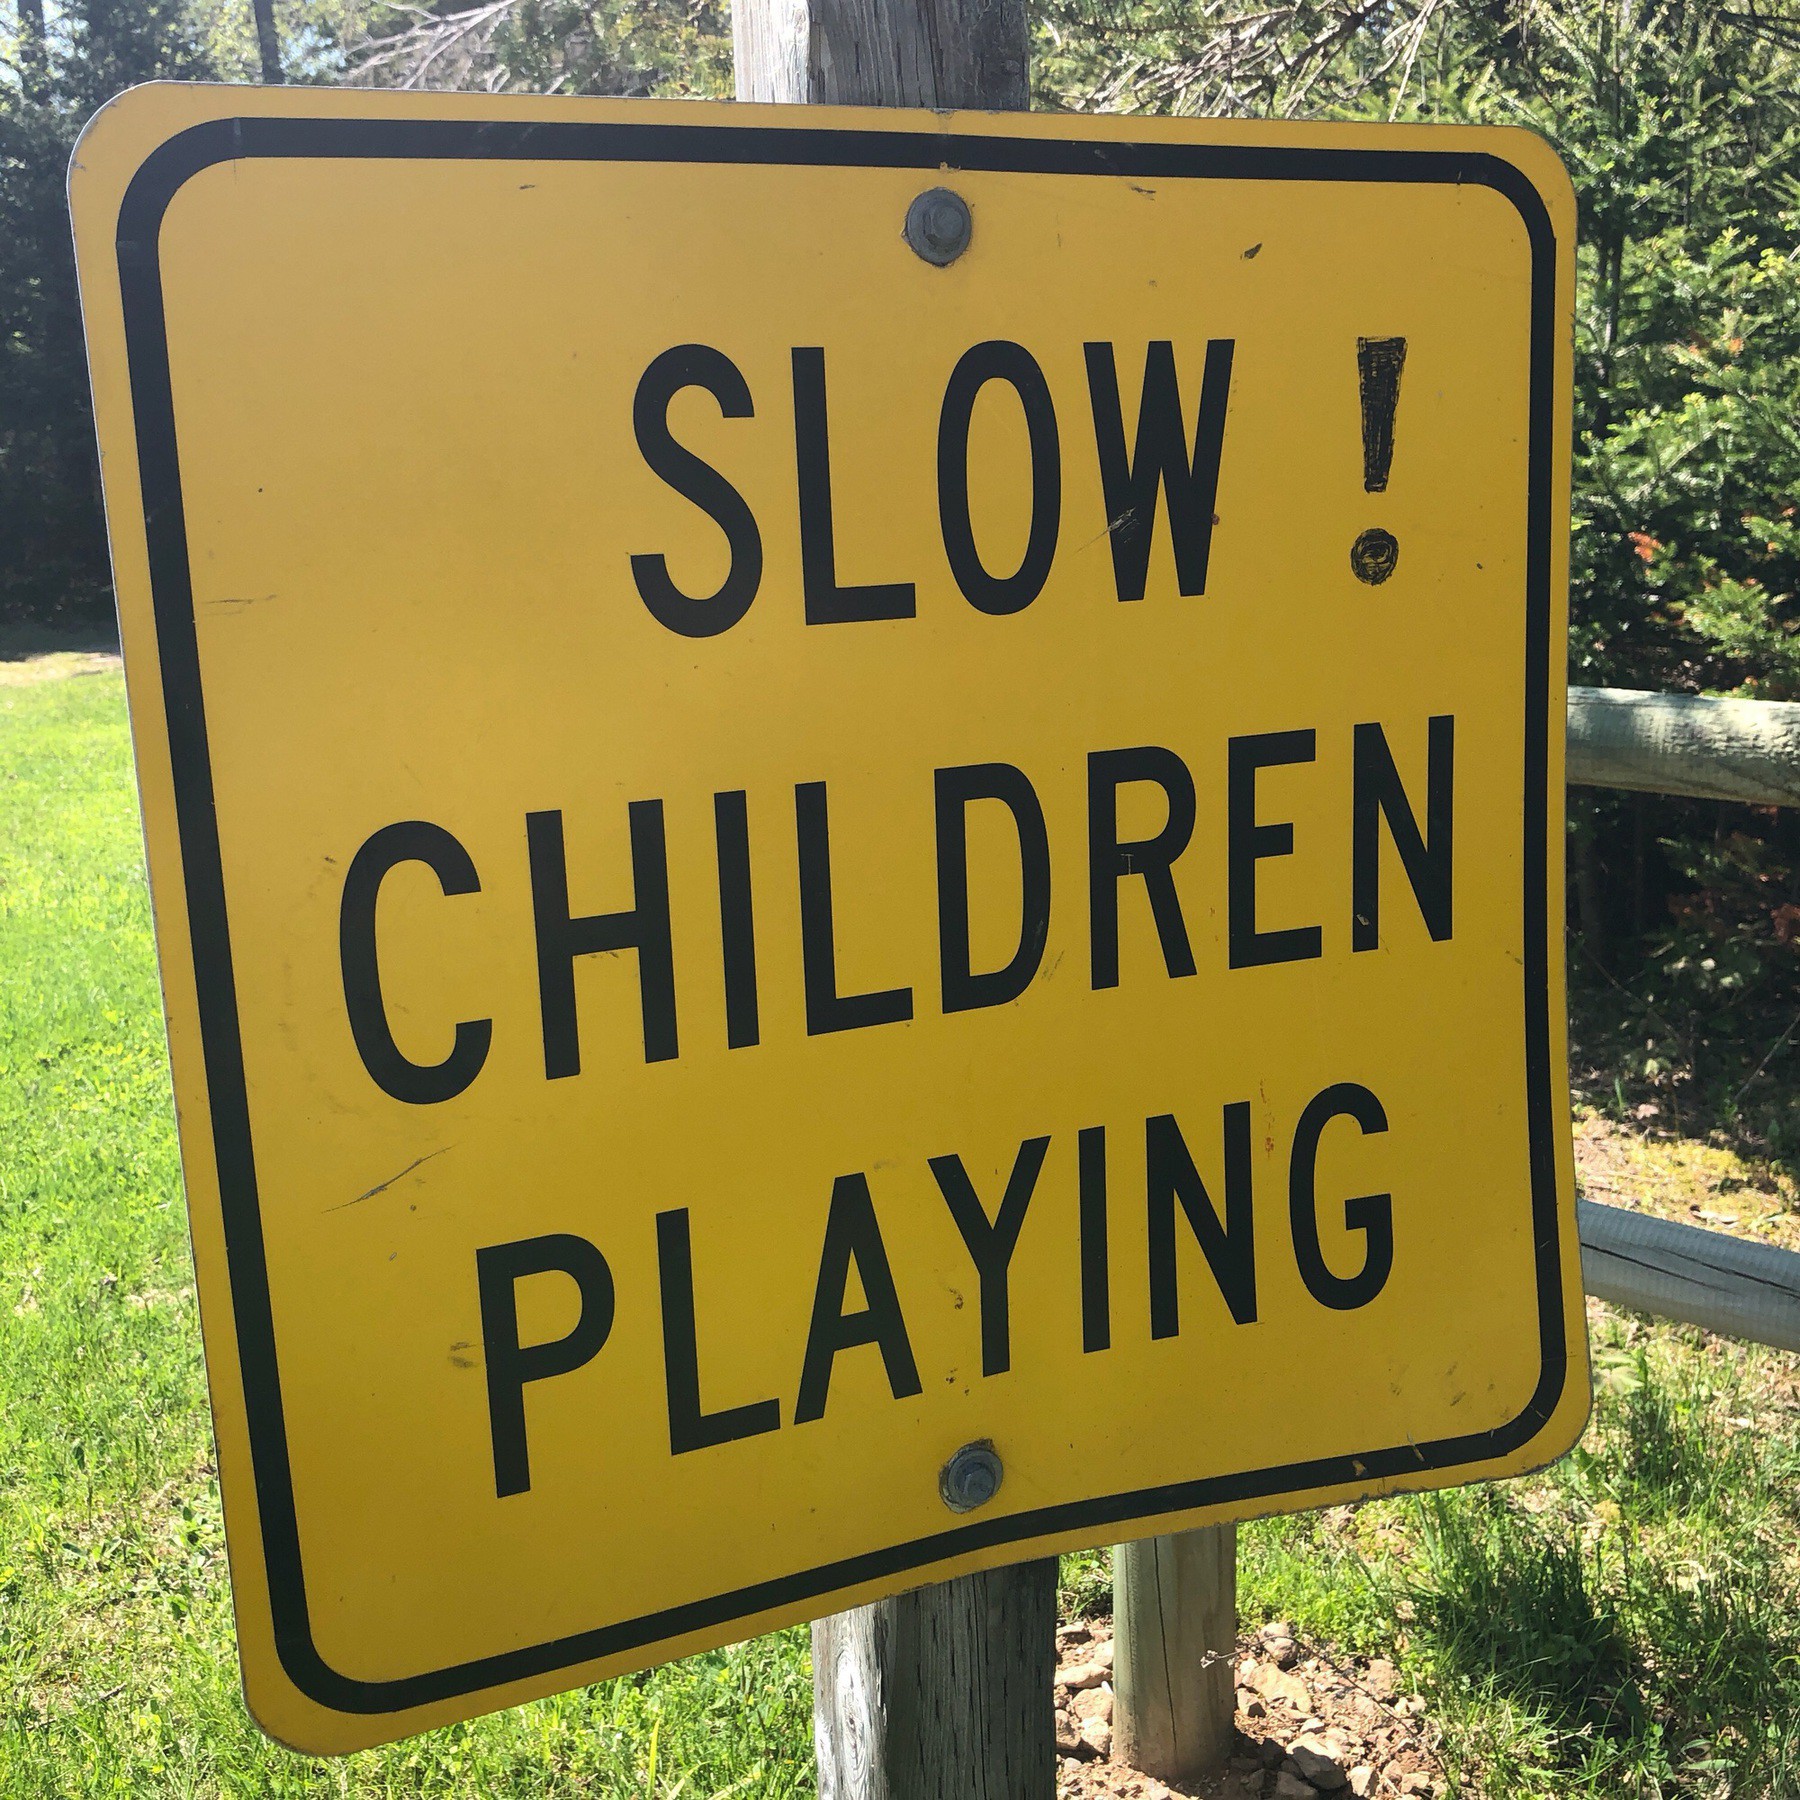 Sign saying "Slow! Children playing."